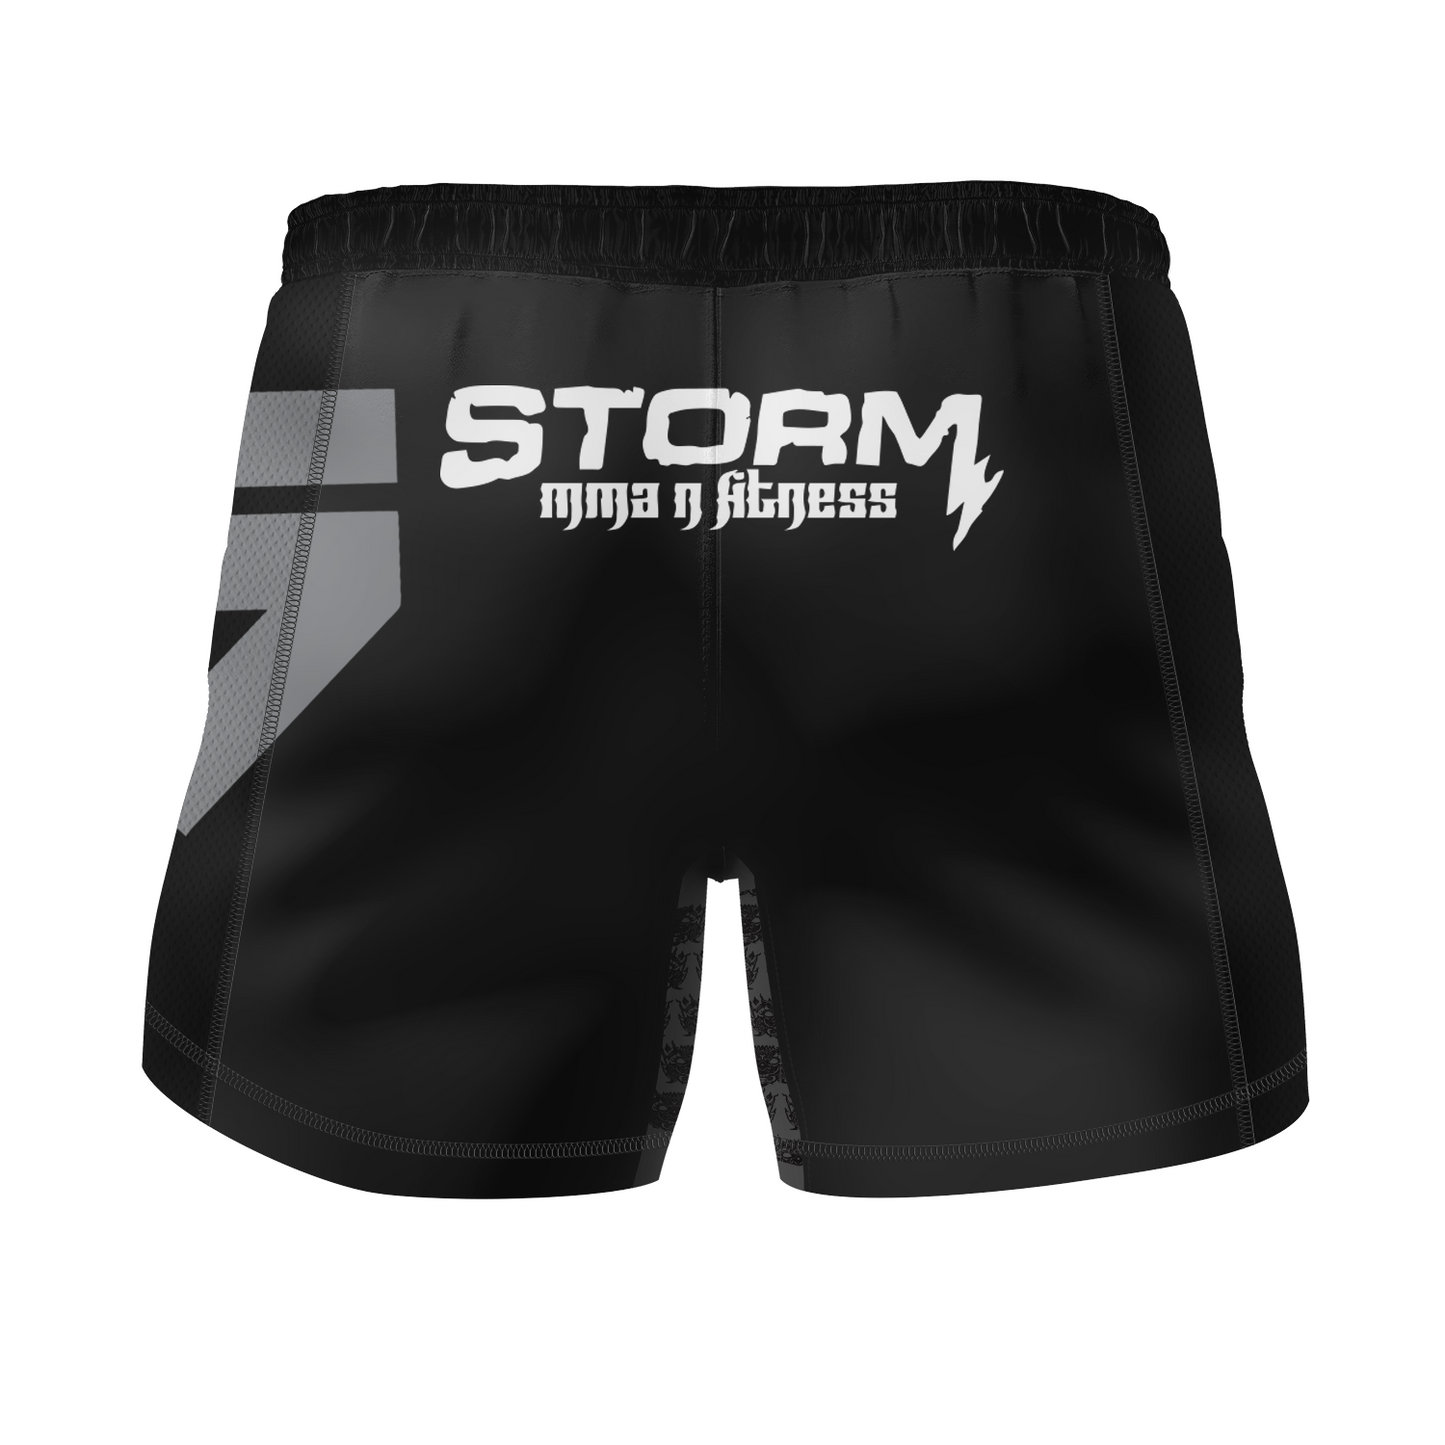 Storm men's fight shorts Standard Issue, black